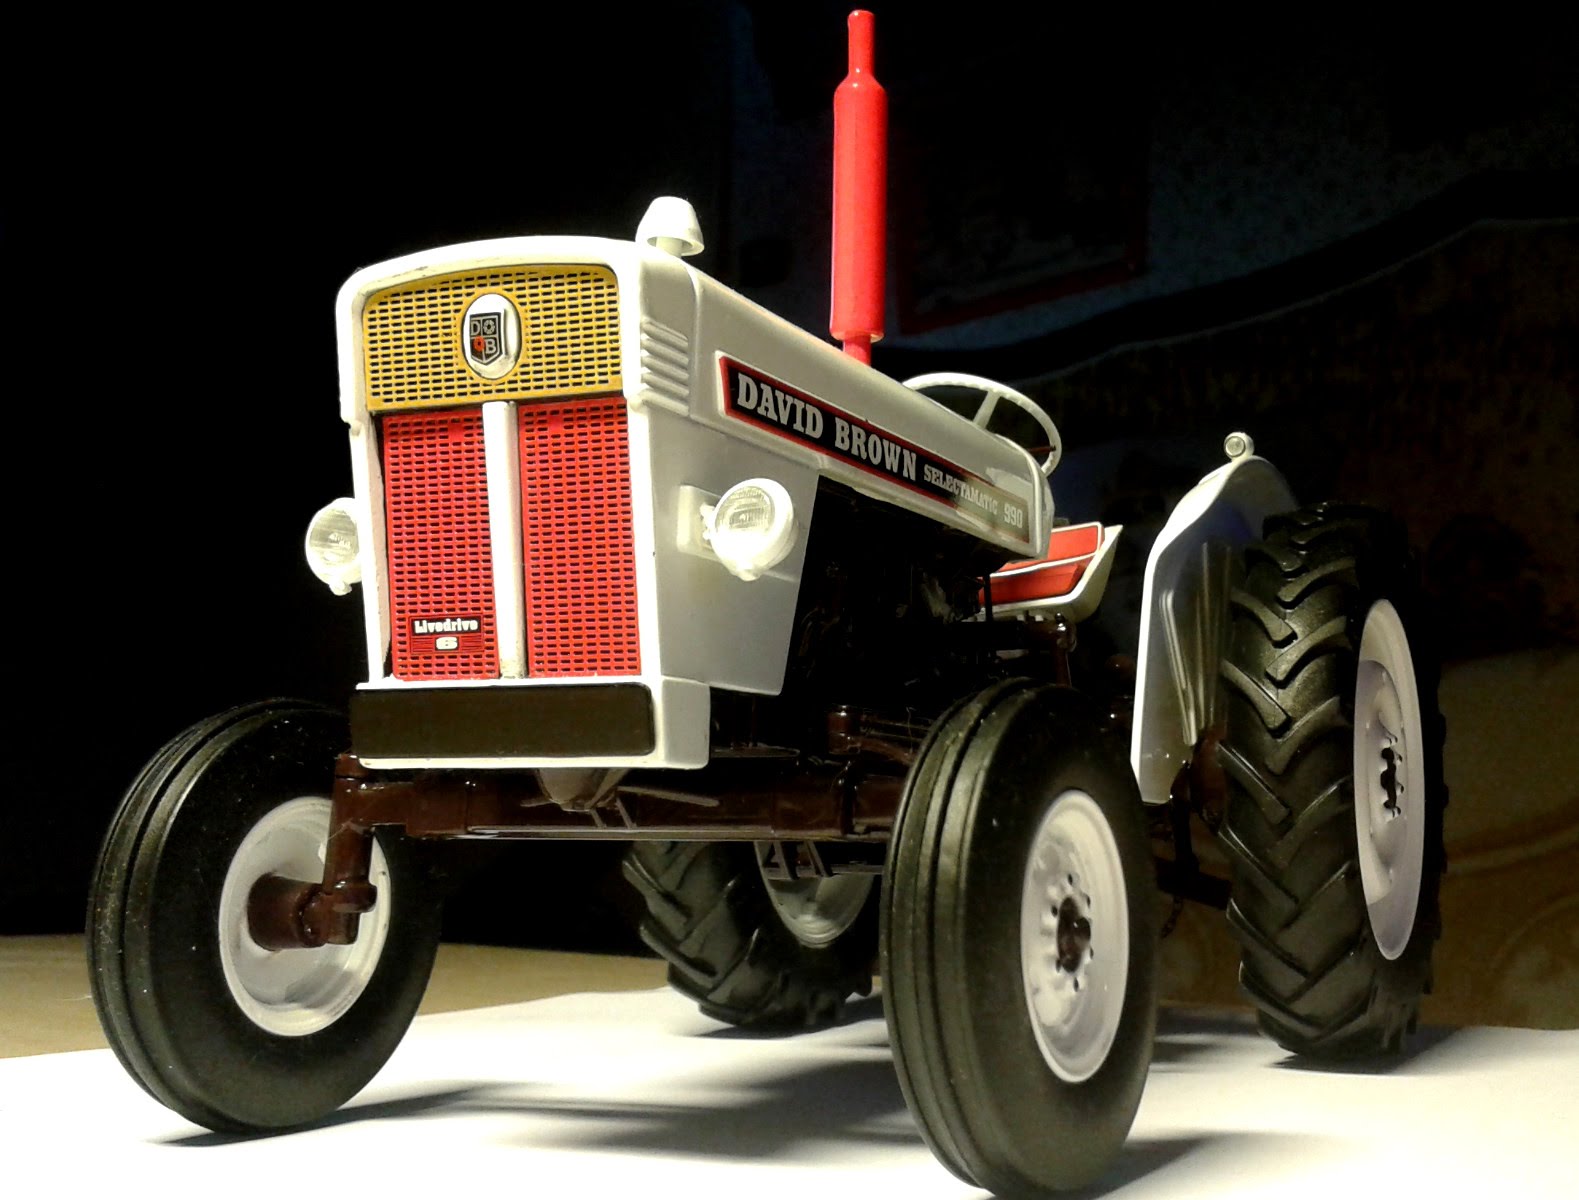 David Brown 990 selectamatic vintage tractor - YouTube